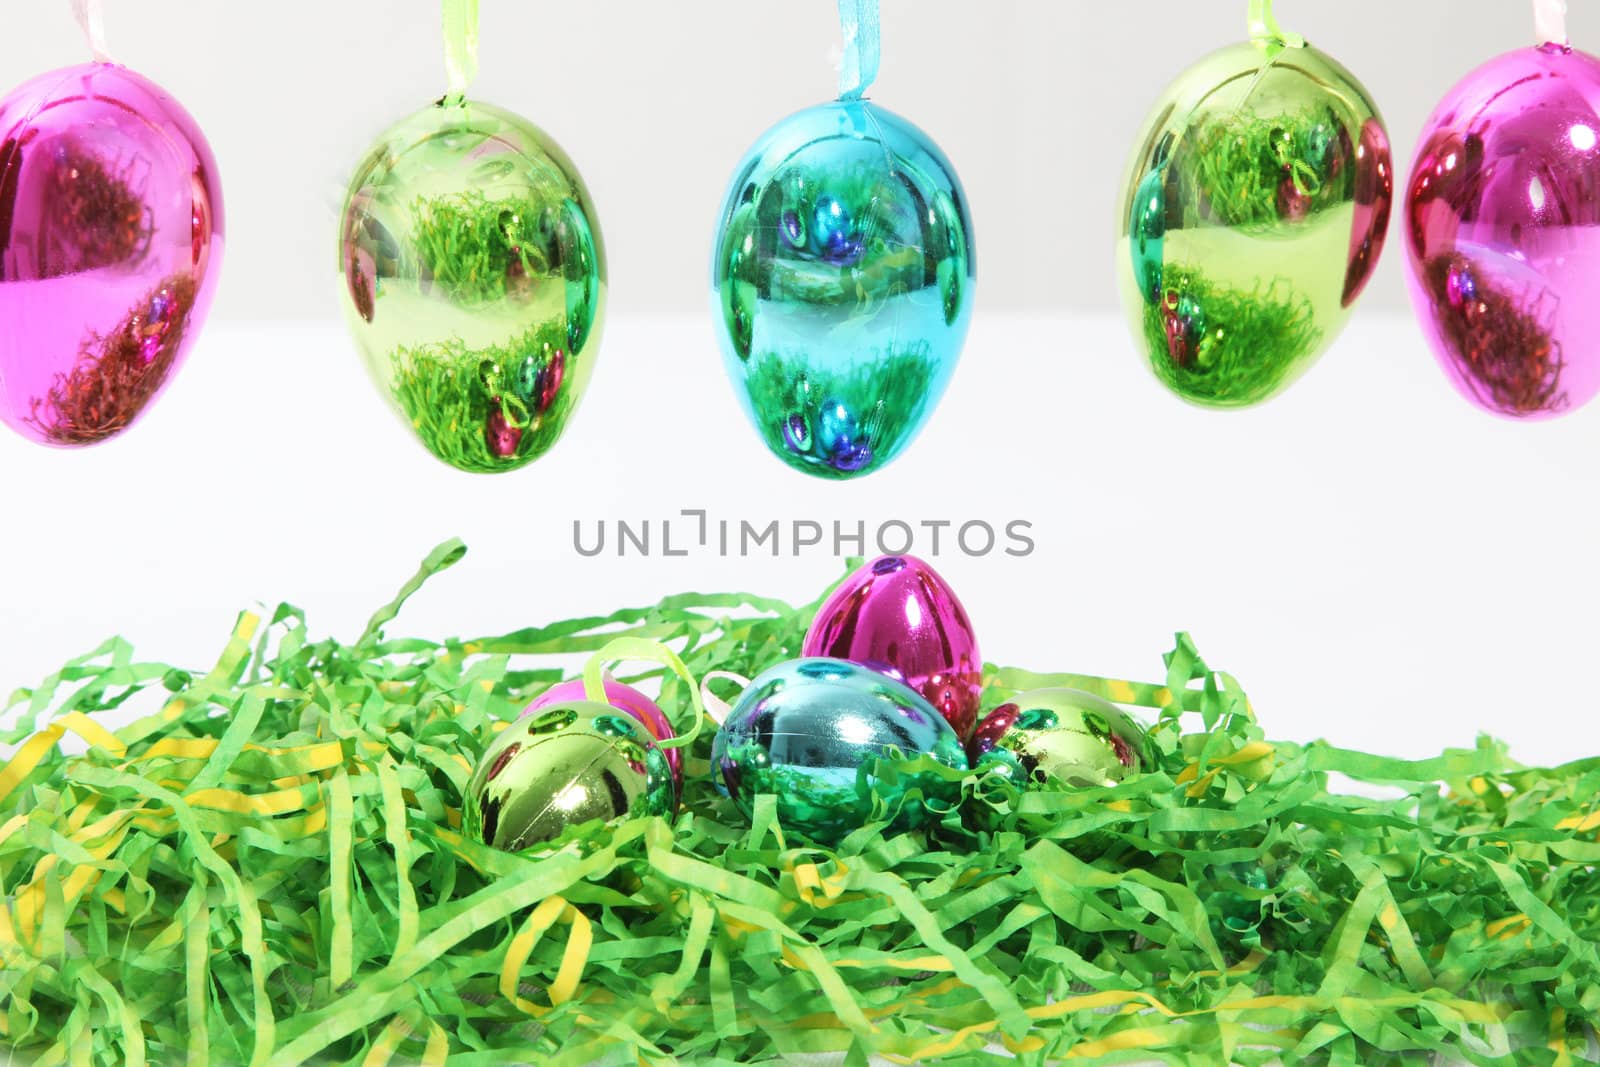 Colourful shiny metallic Easter Eggs by Farina6000